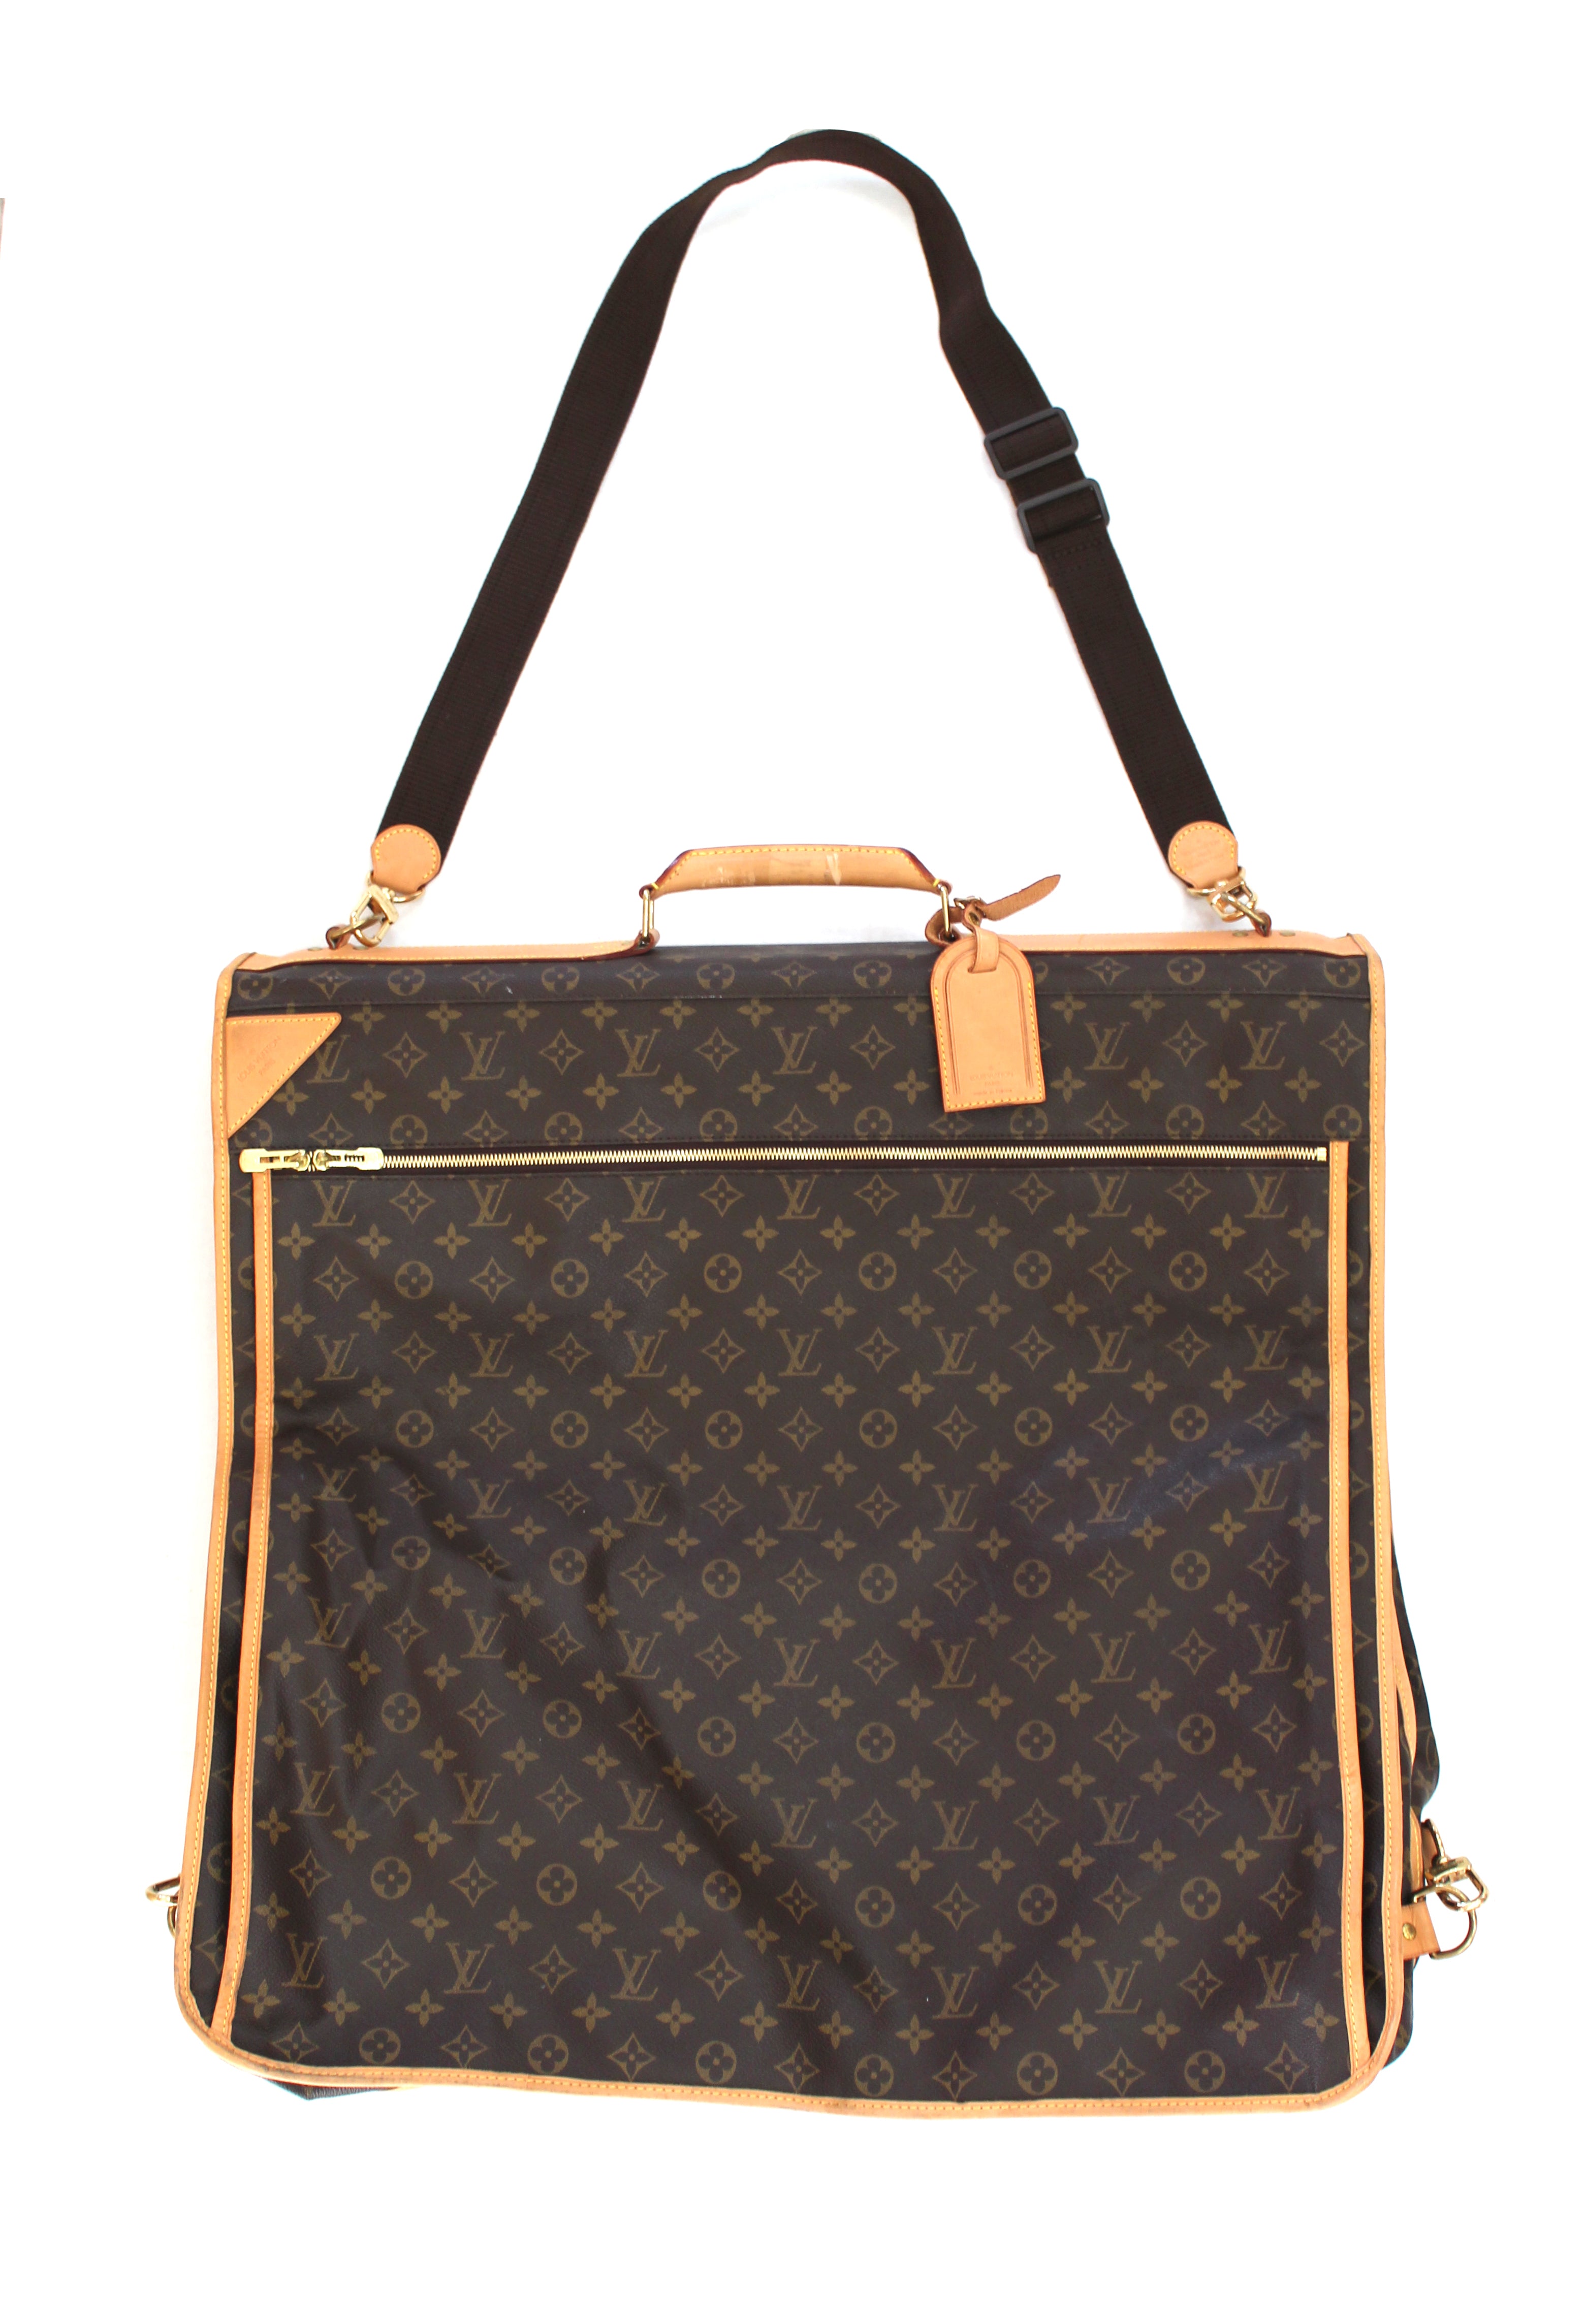 Authentic Louis Vuitton Luggage